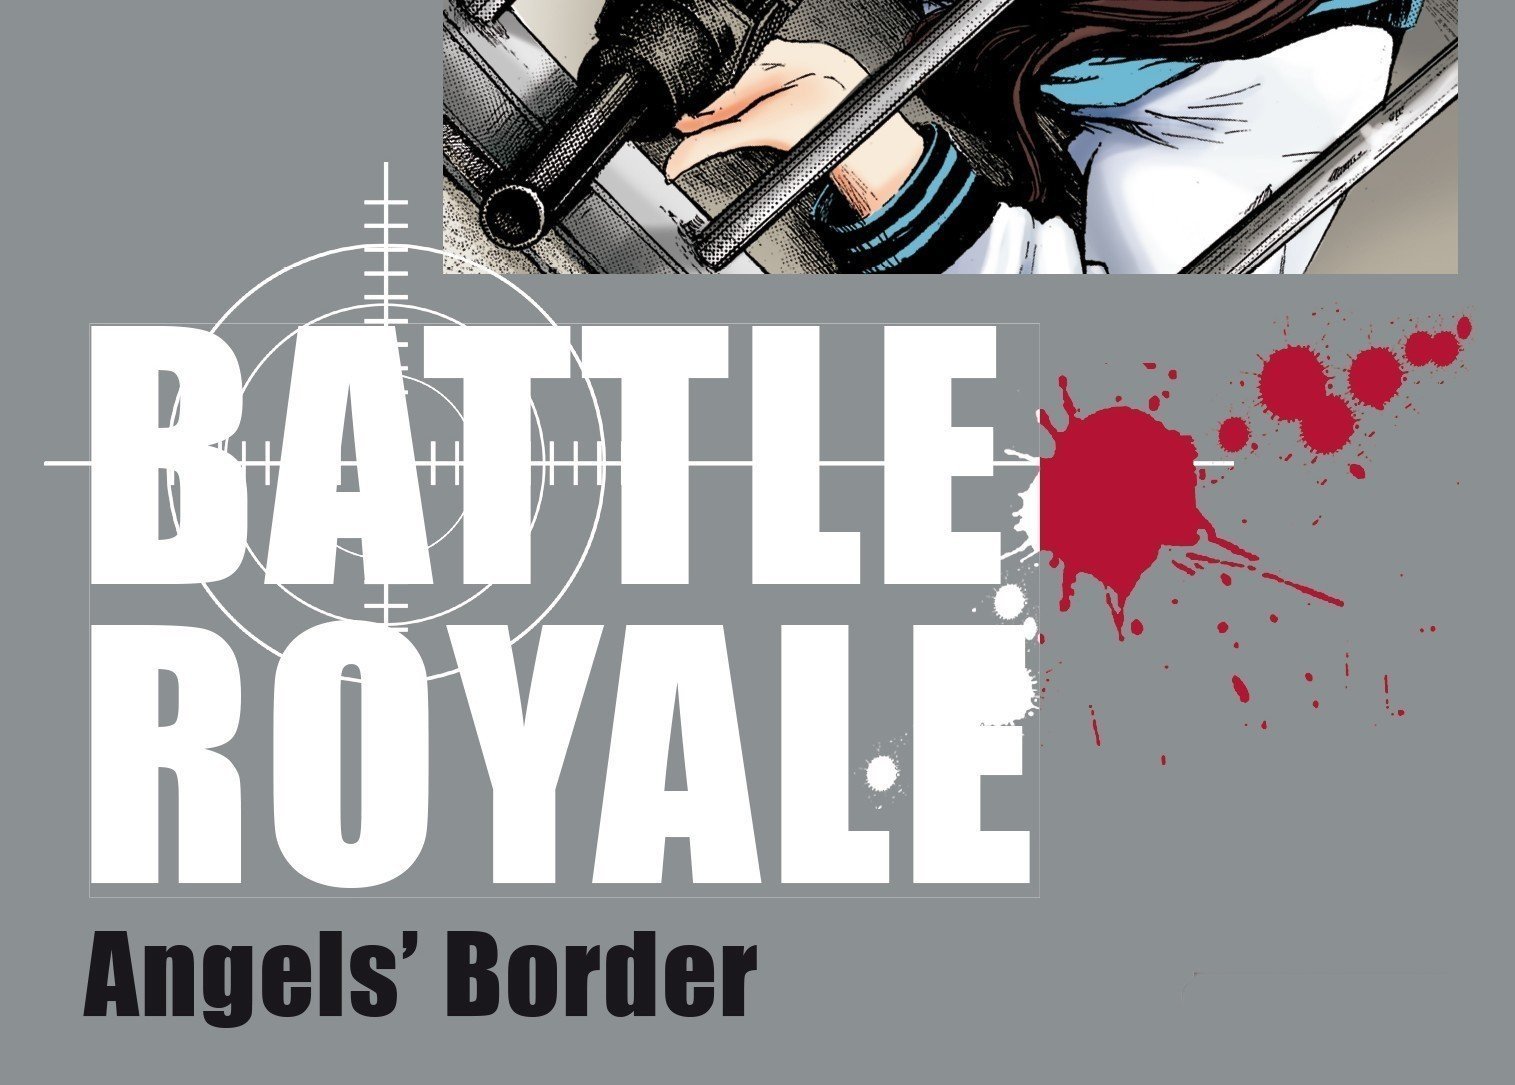 BATTLE ROYALE ANGEL'S BORDER recensione